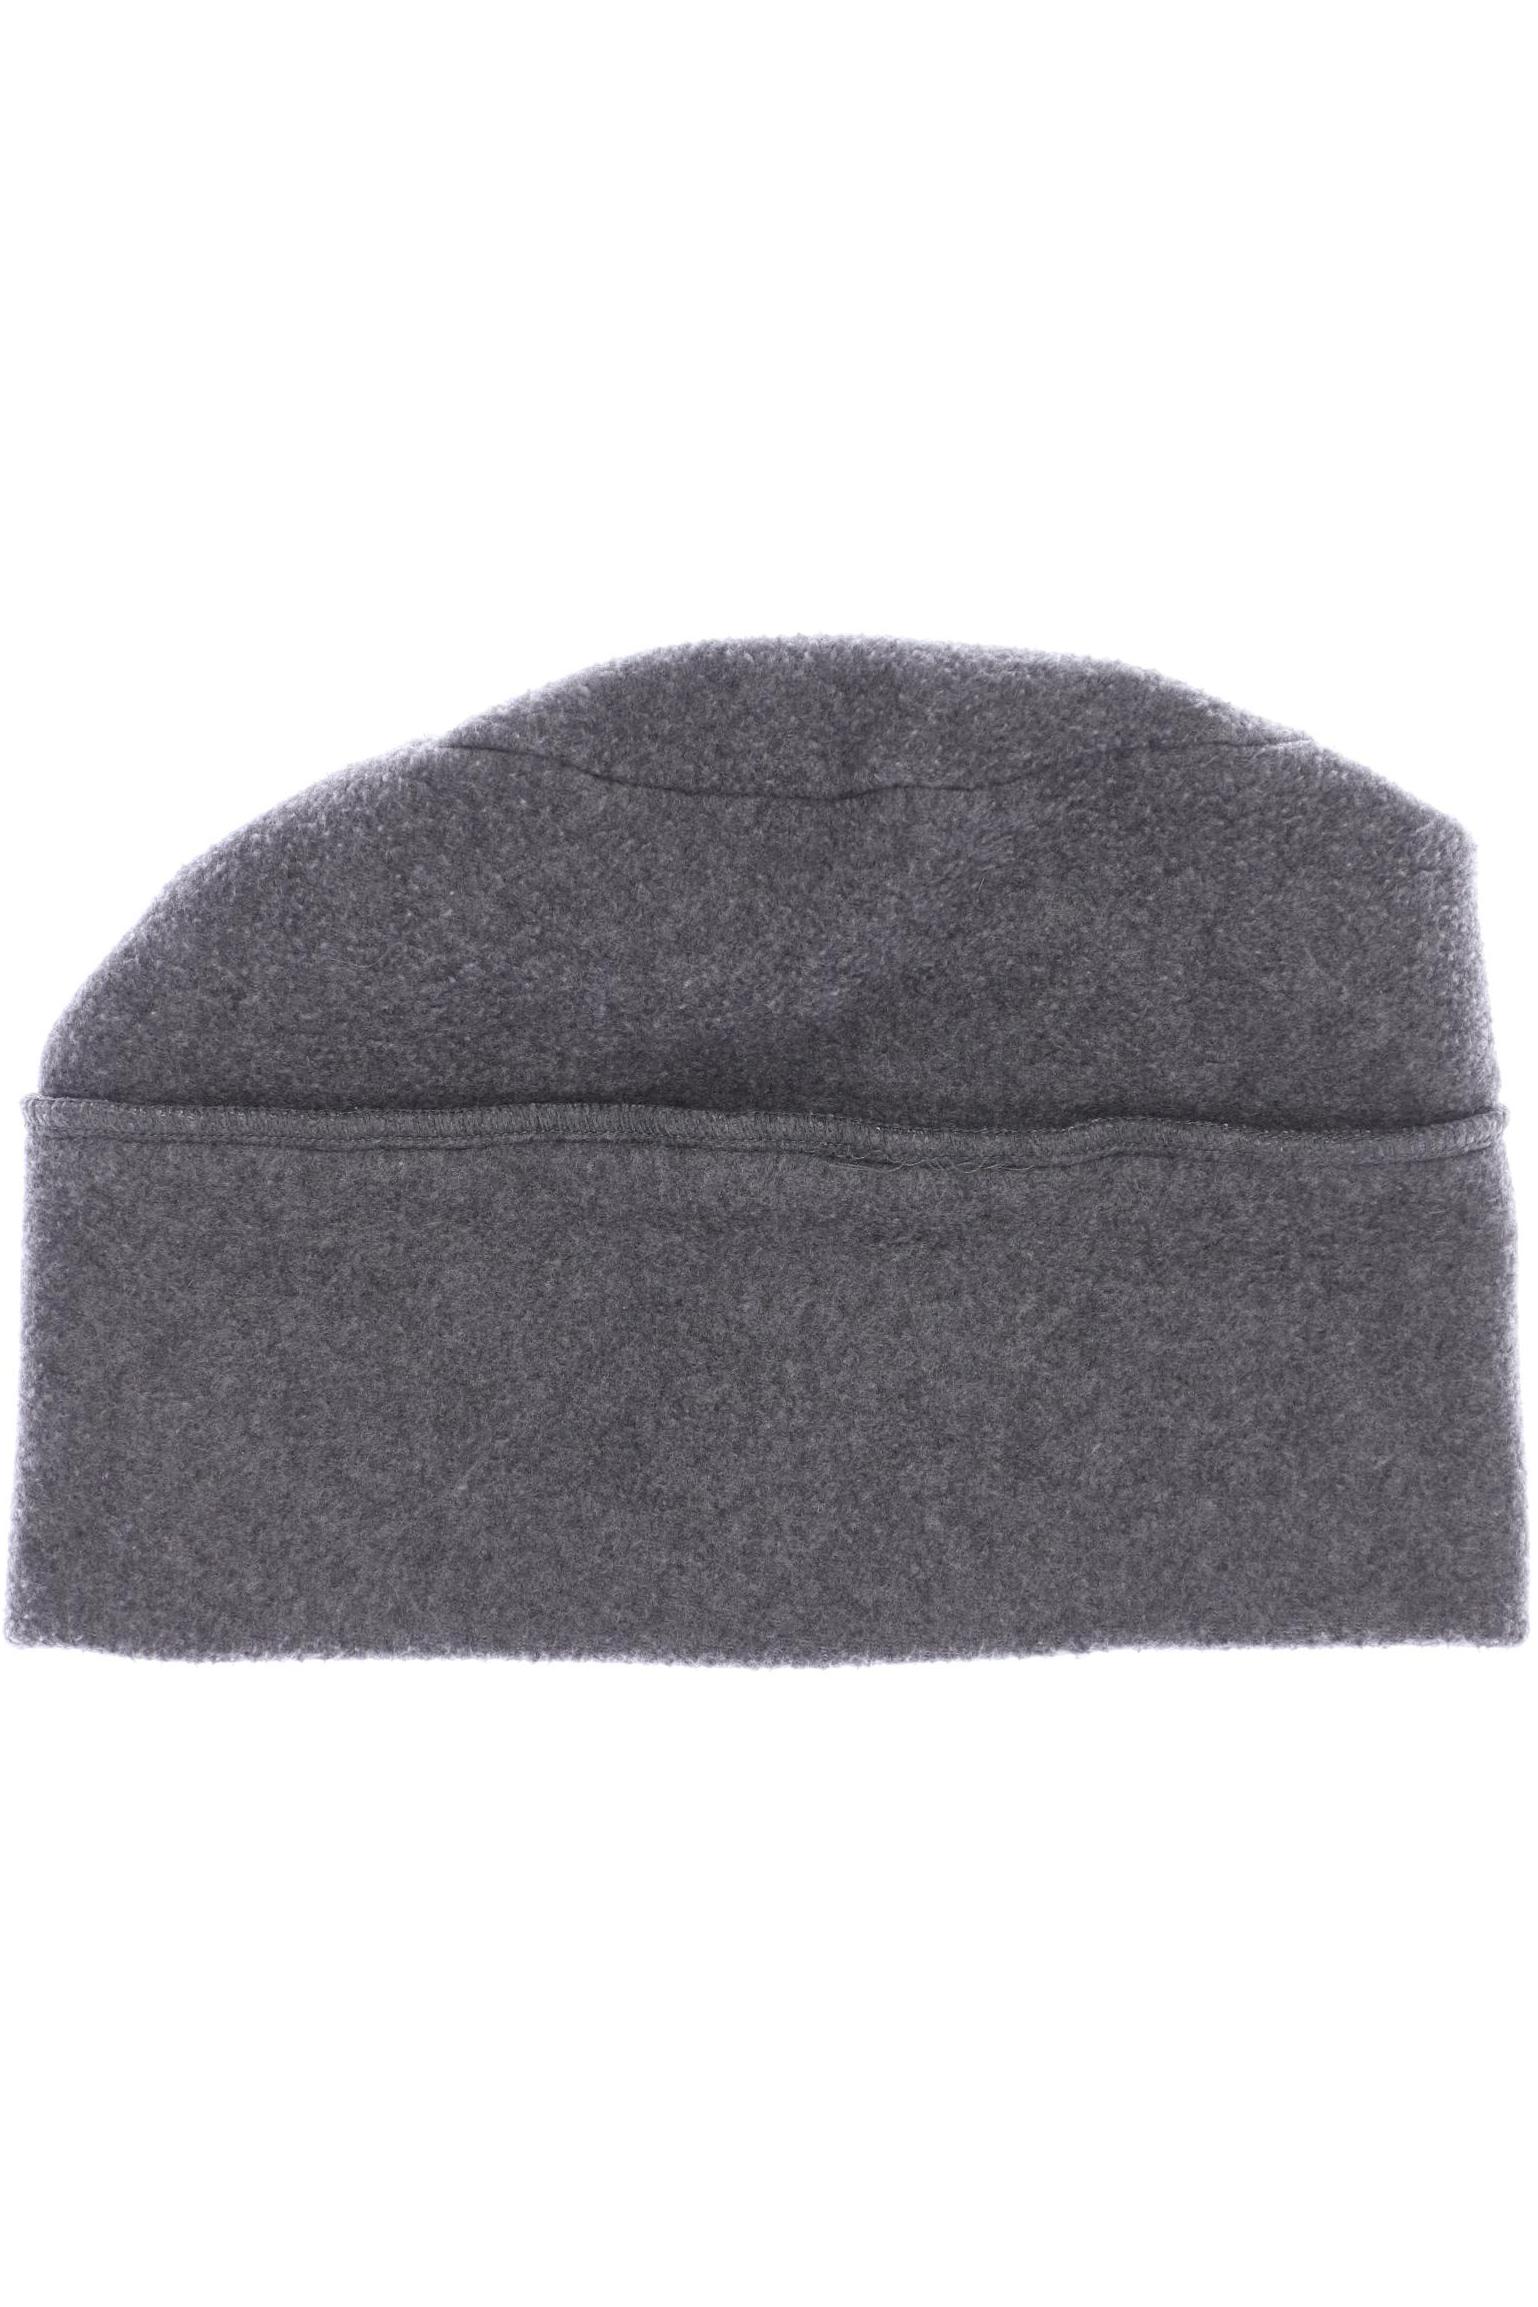 CAPO Herren Hut/Mütze, grau von CAPO